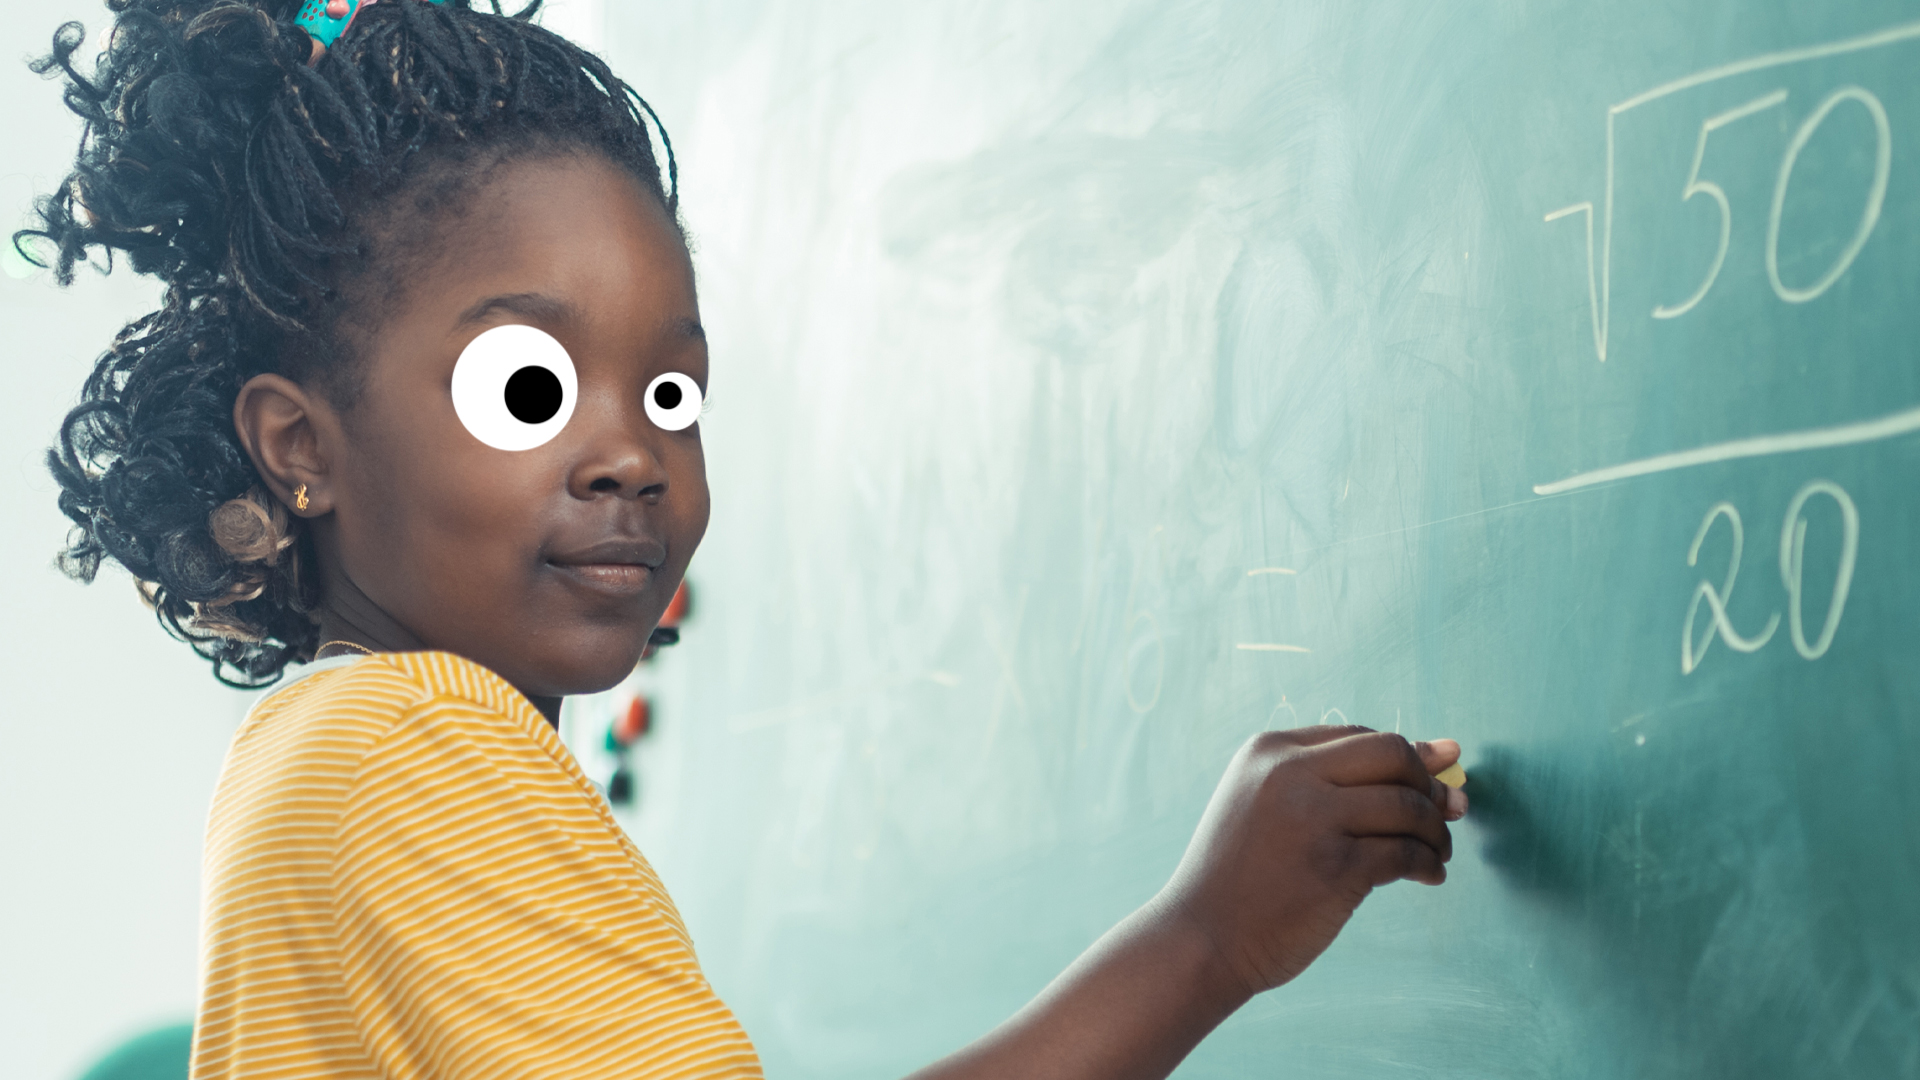 A girl solving a maths problem on a chalkboard